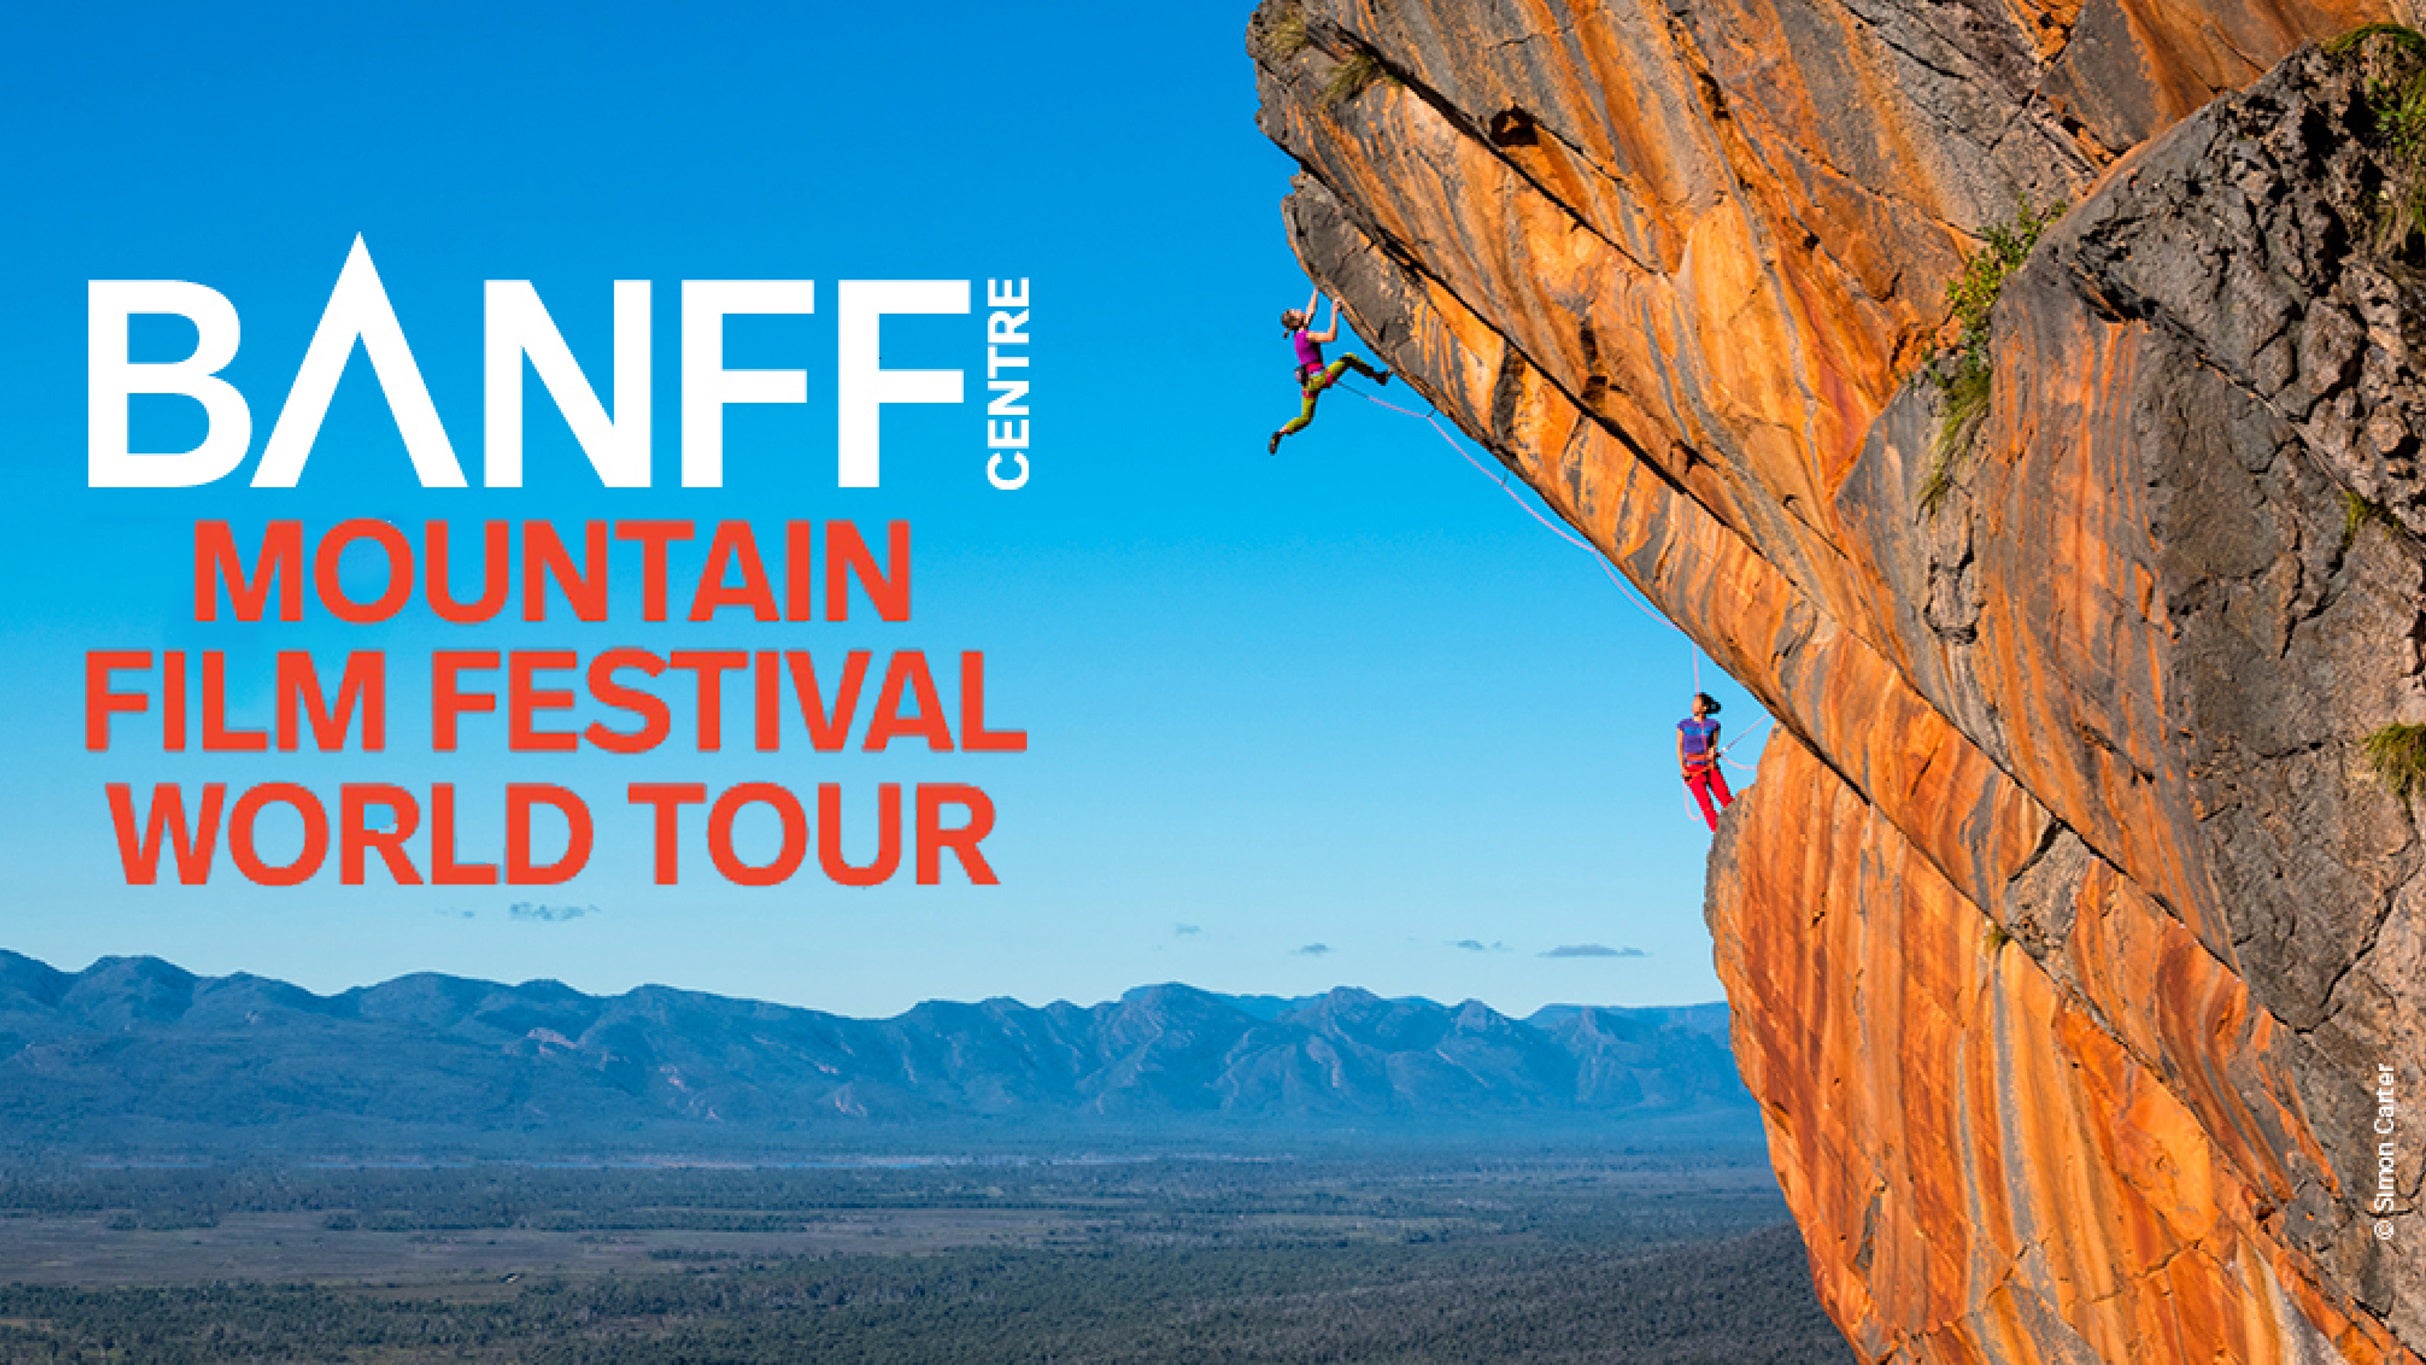 Banff Mountain Film Festival World Tour -3 Day Feb 29-March 2 in Denver promo photo for Venue presale offer code